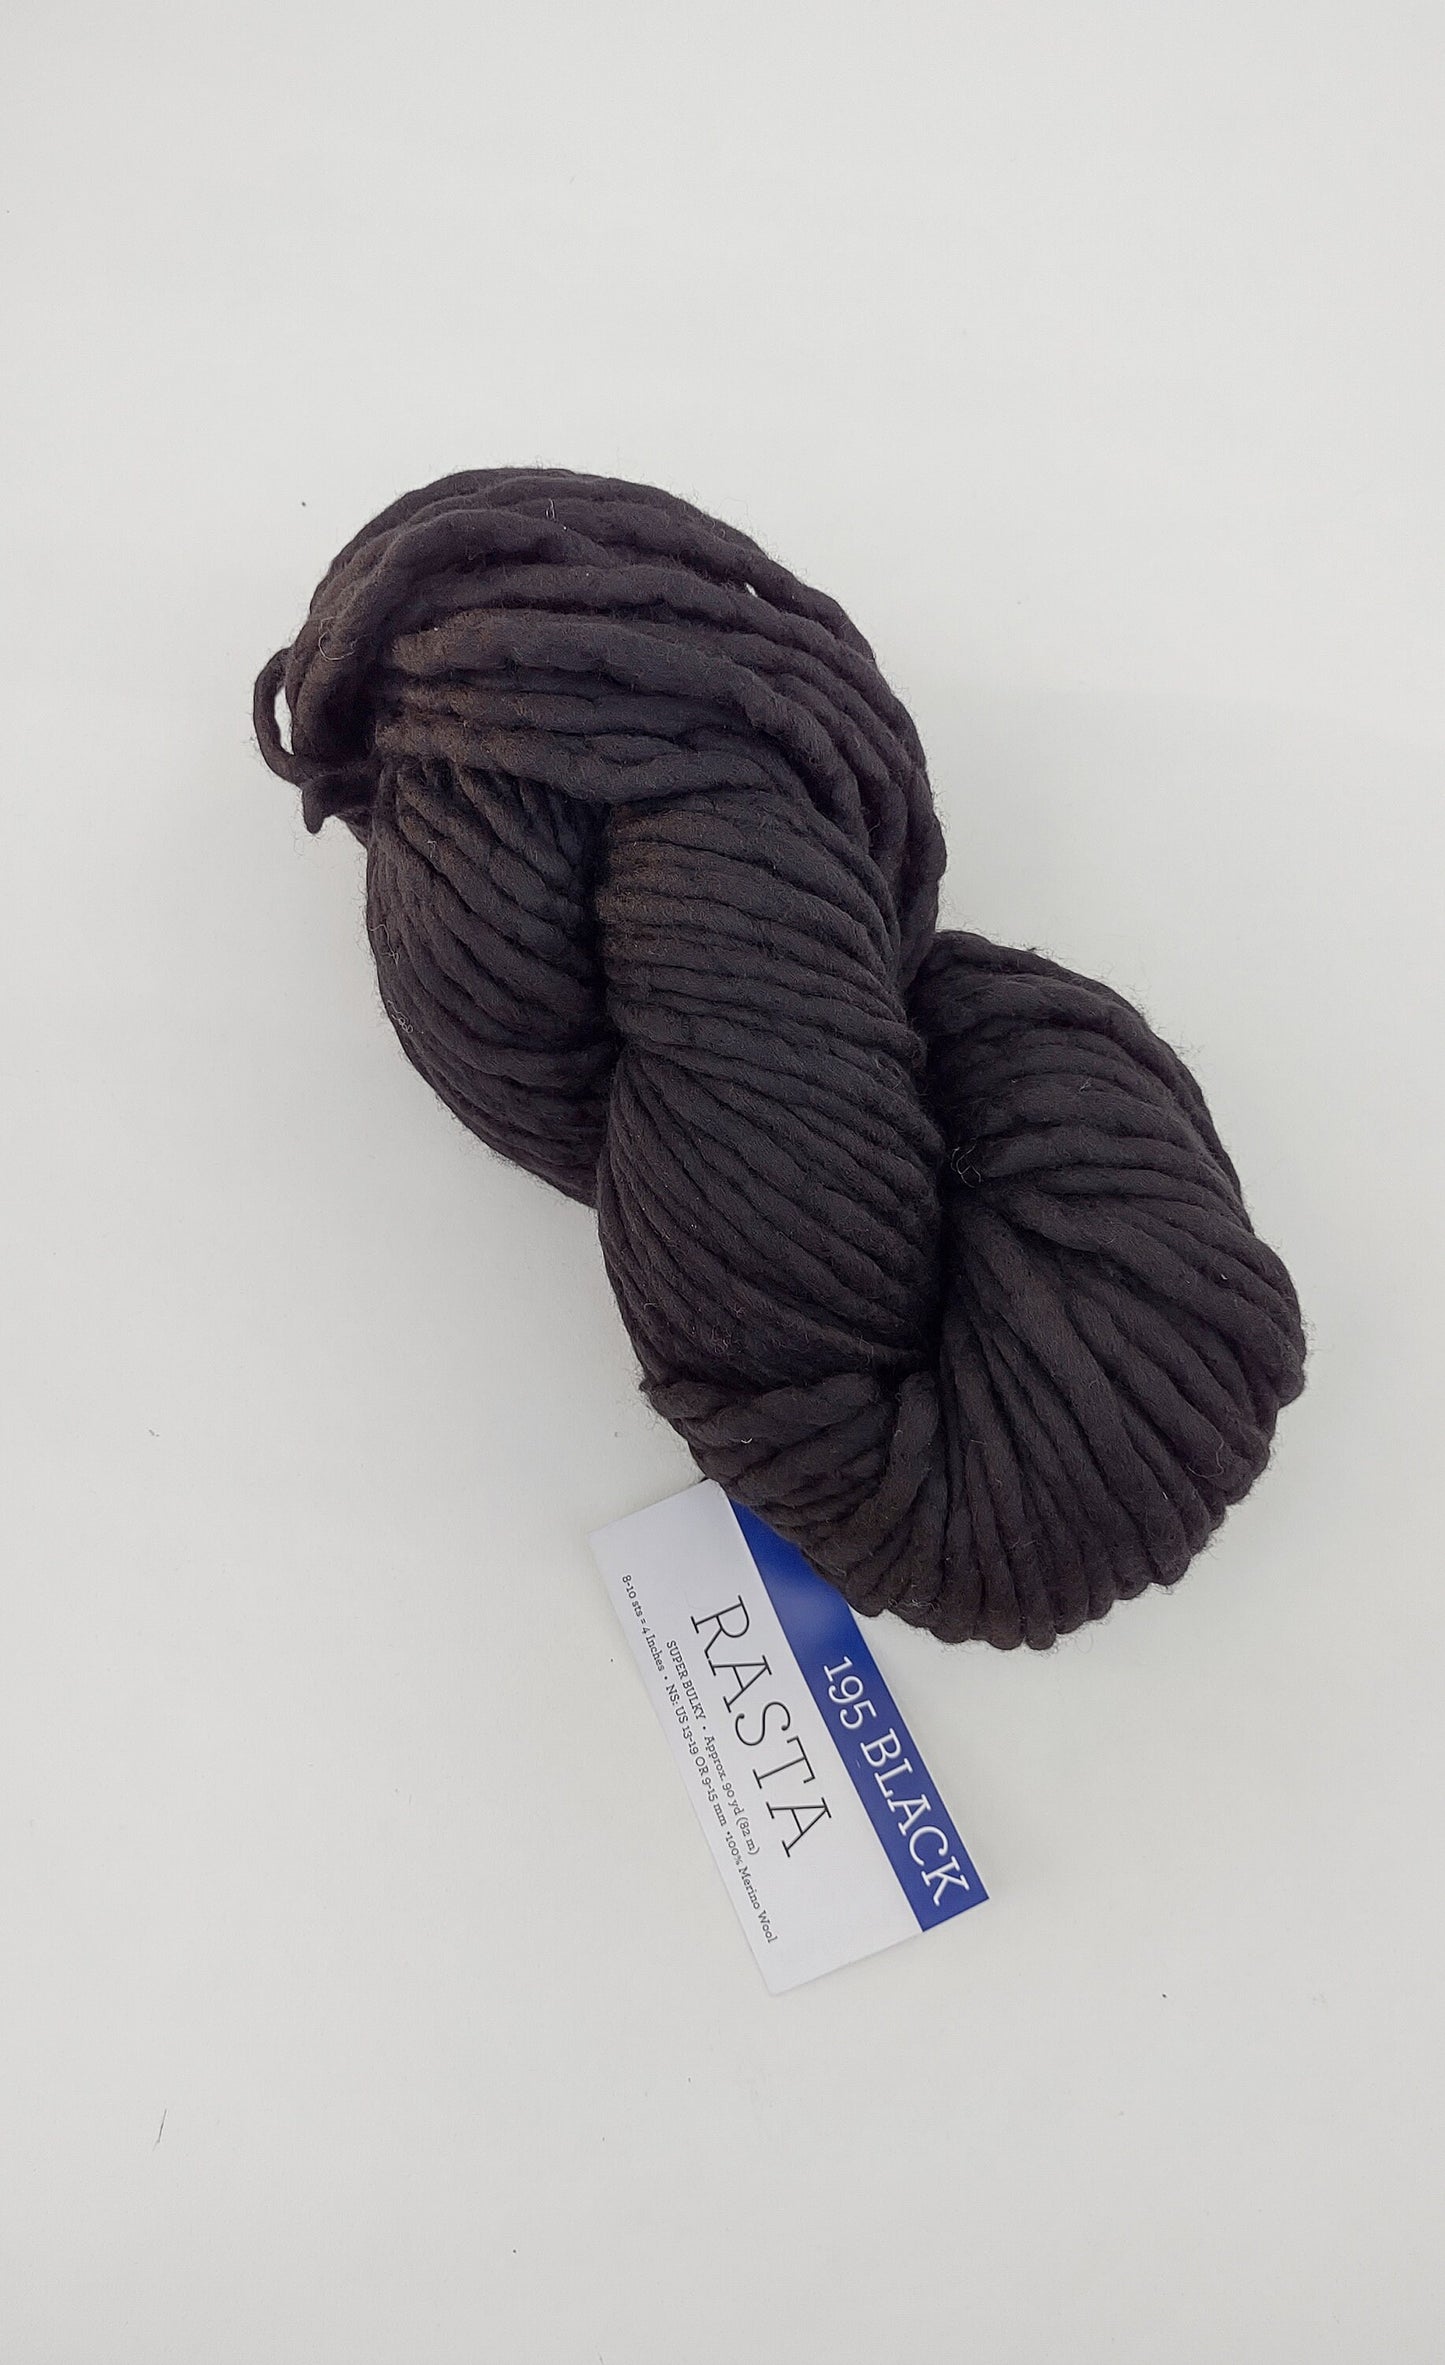 Malabrigo Rasta Yarn 1 skein of Black. Knitting Kit. Soft Merino Wool Kit. Pattern NOT included. Variegated yarn for knitting or crochet